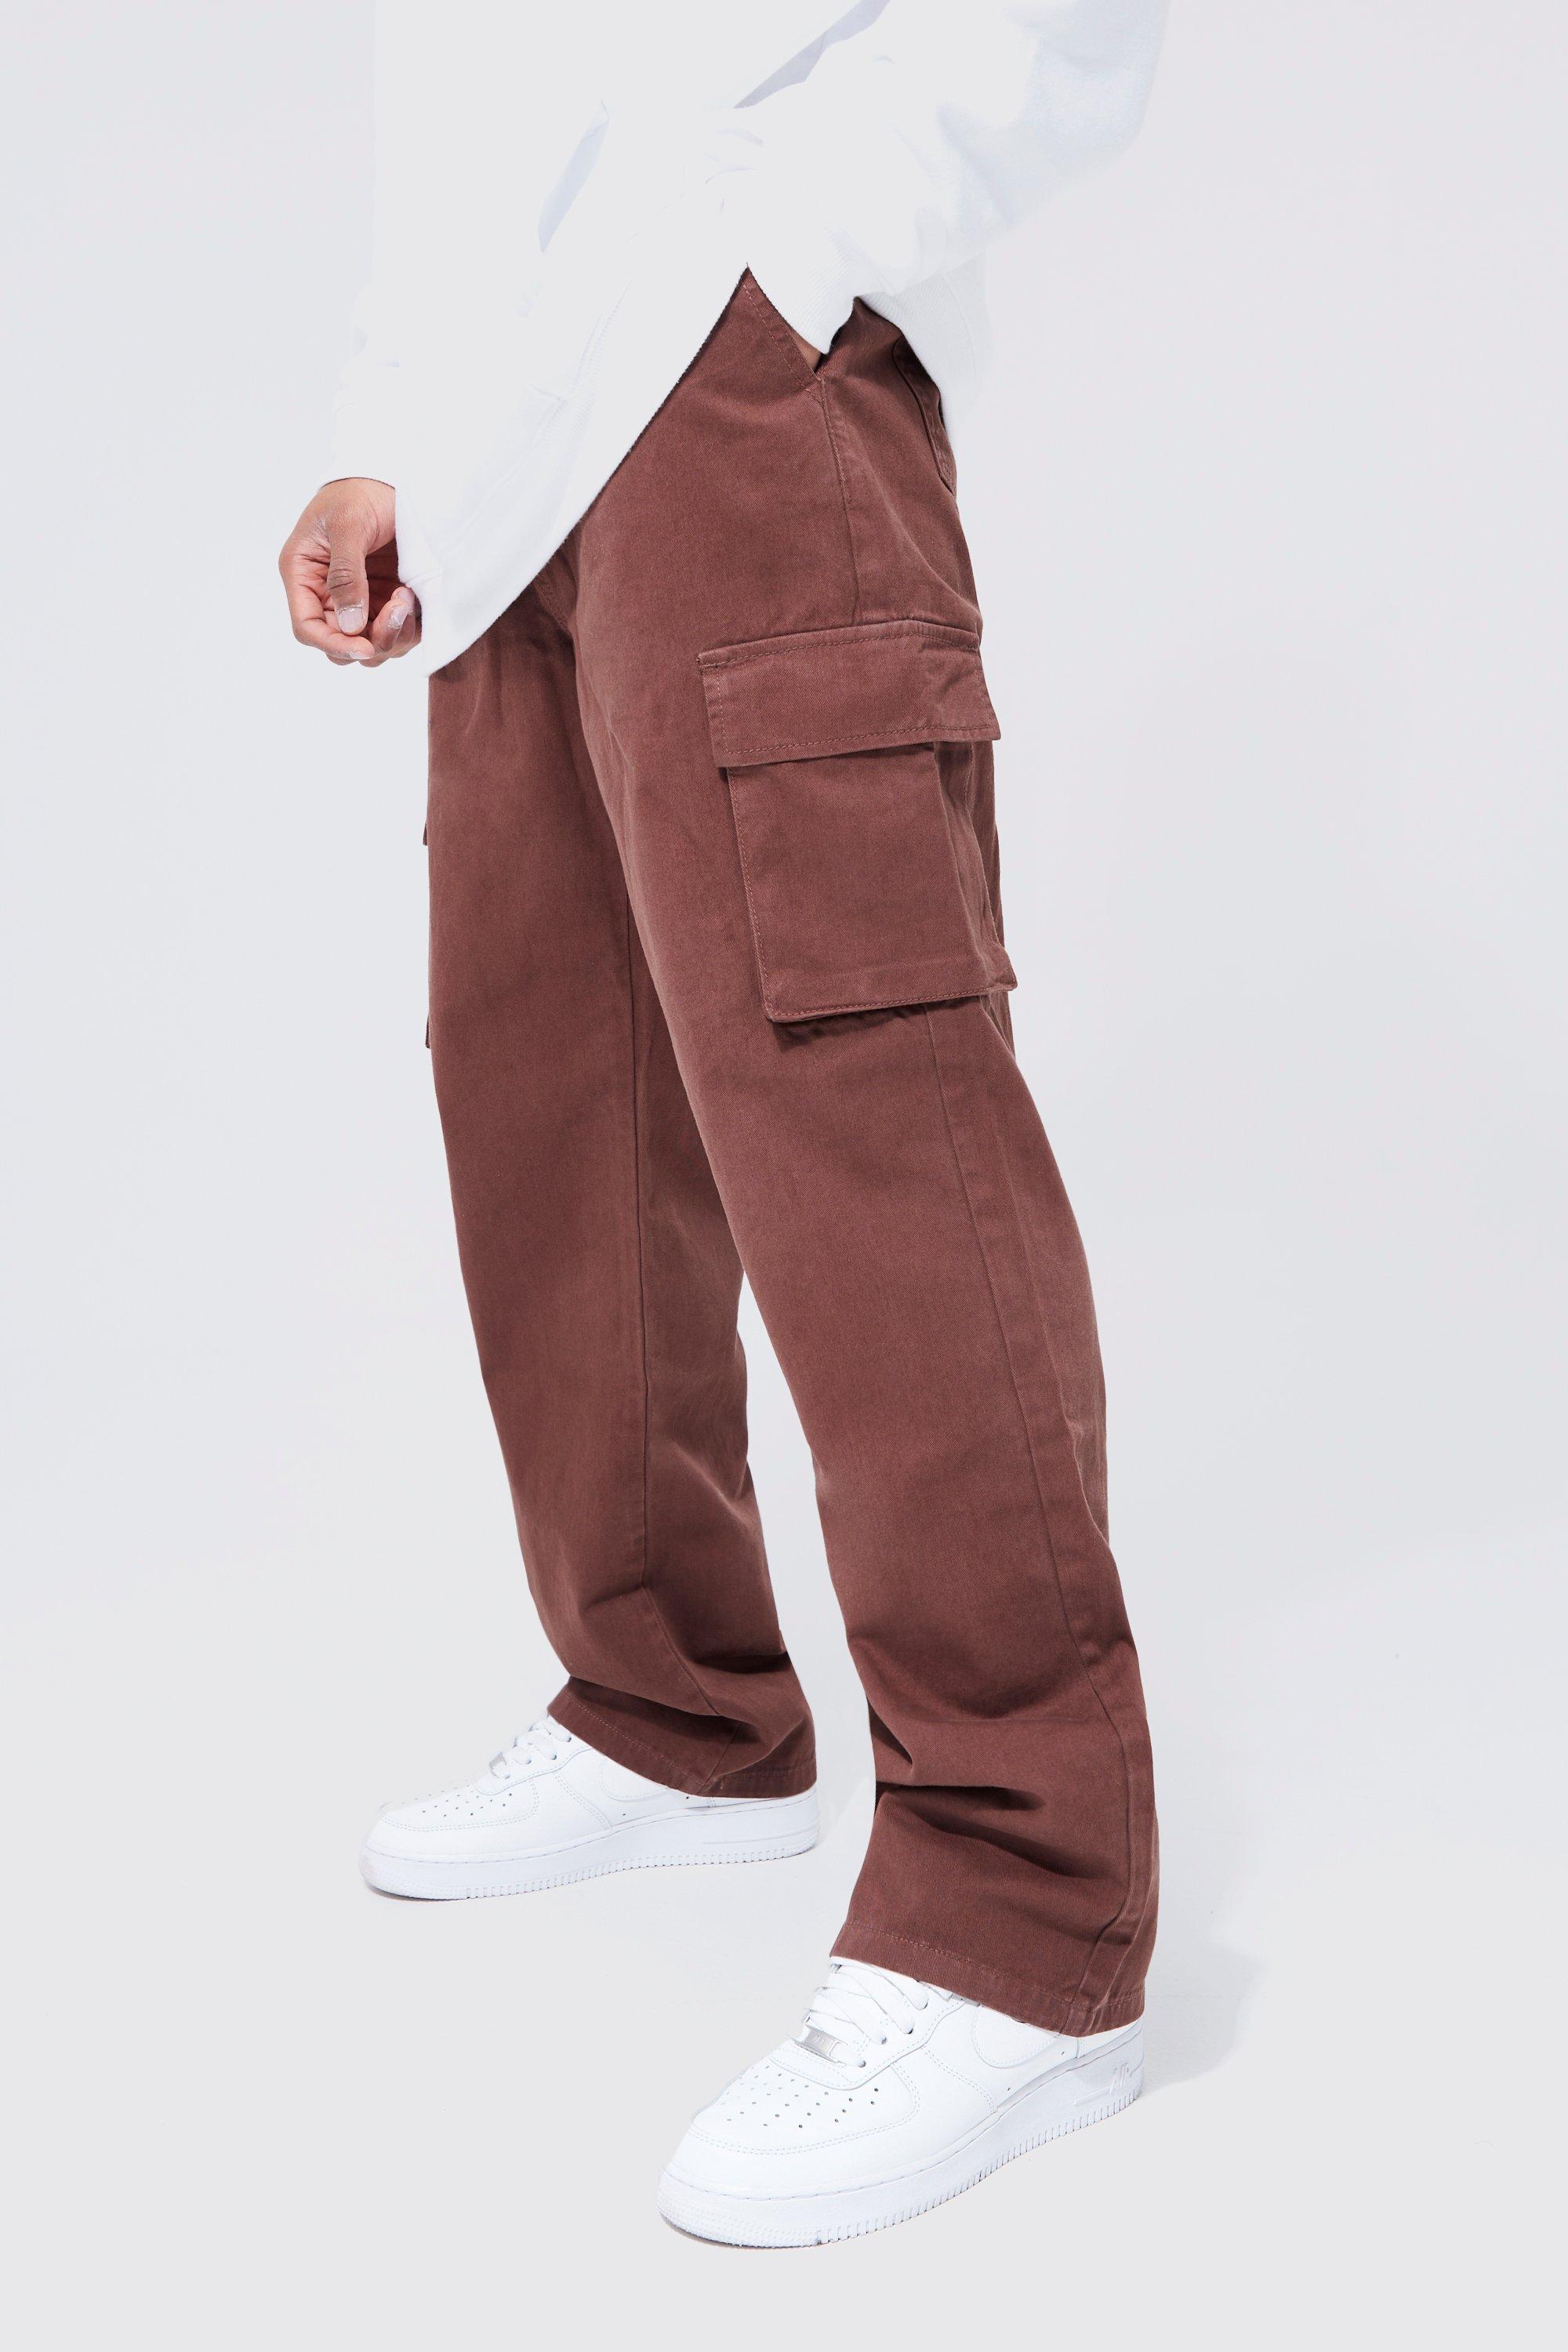 pantalon chino cargo homme - brun - m, brun